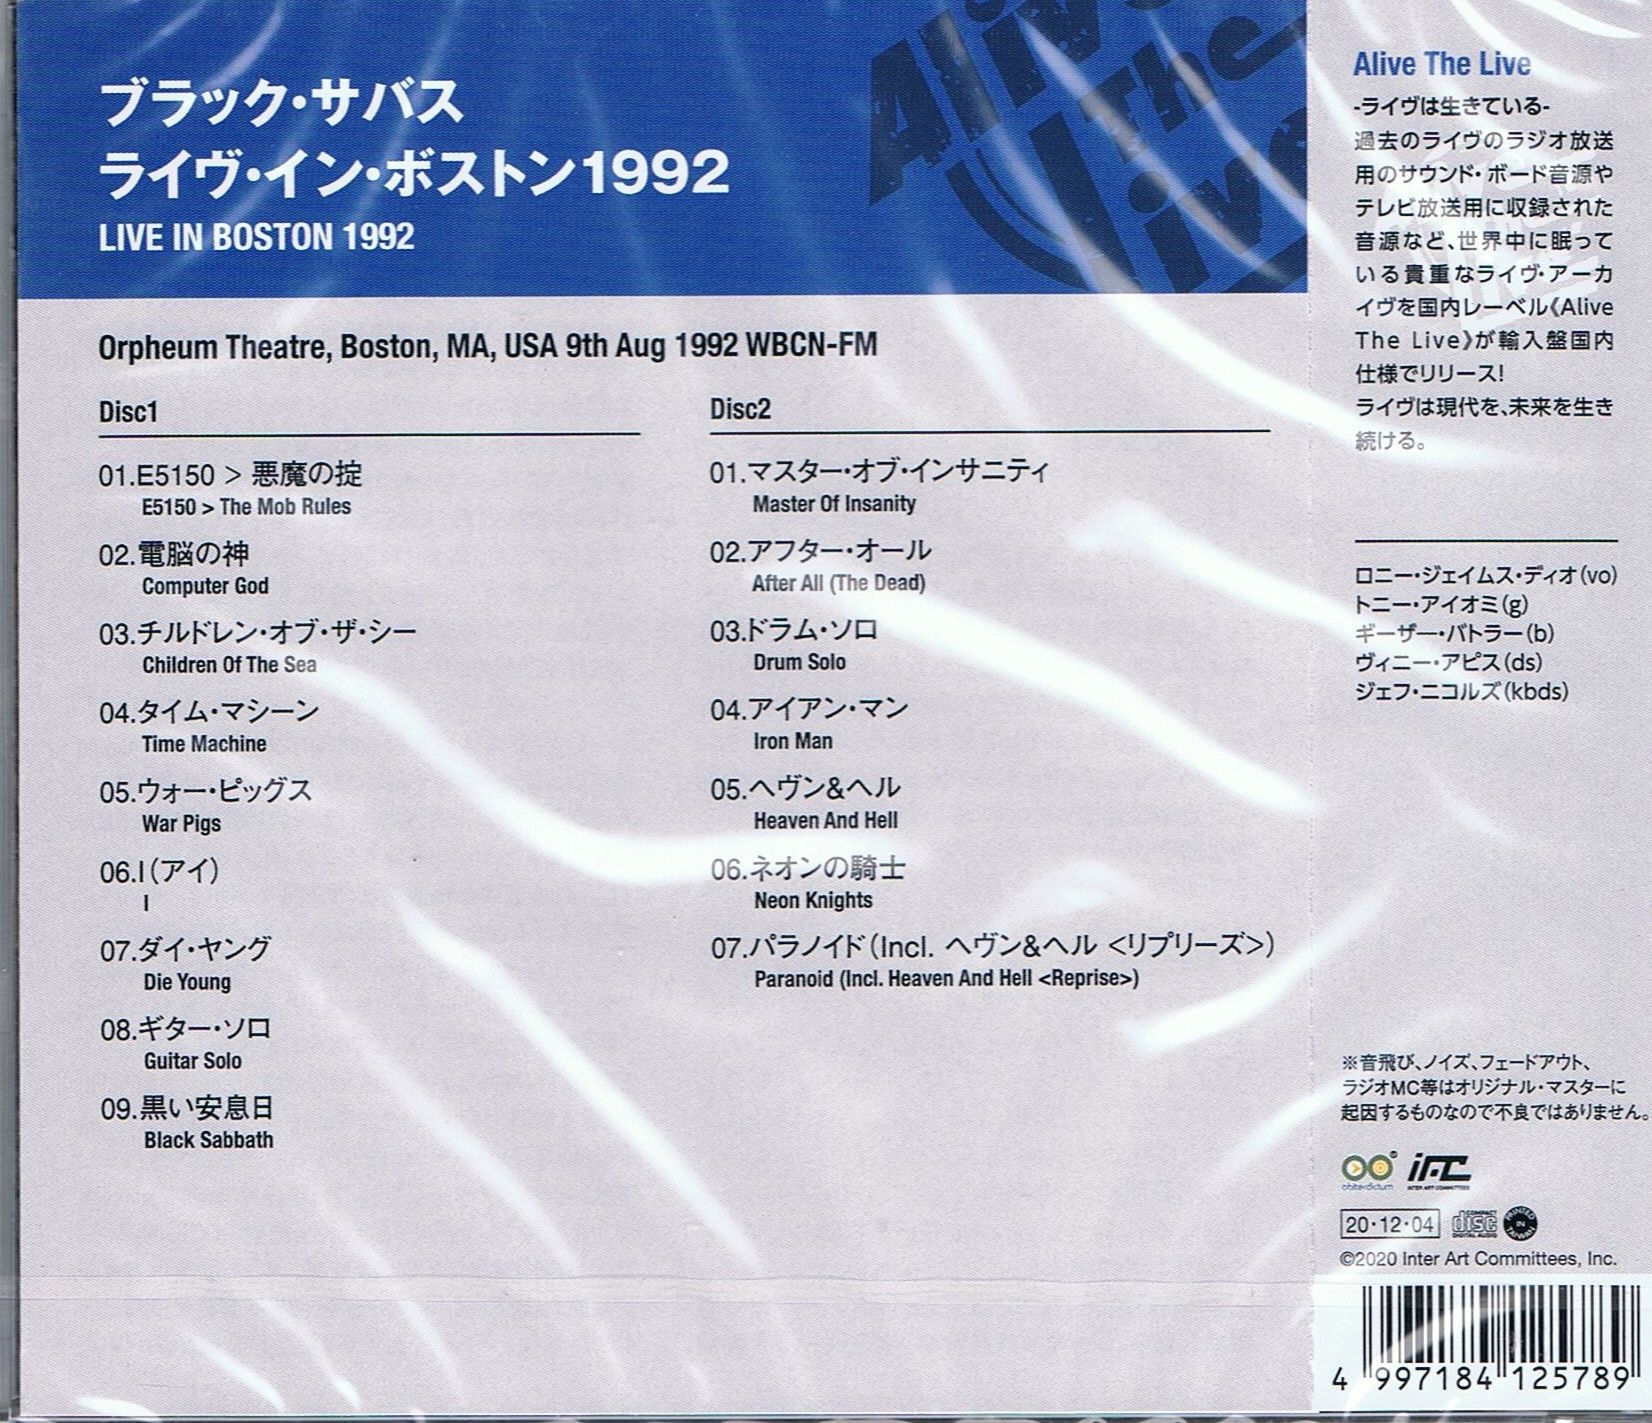 Tapio's Ronnie James Dio Pages: Black Sabbath bootleg CD discography